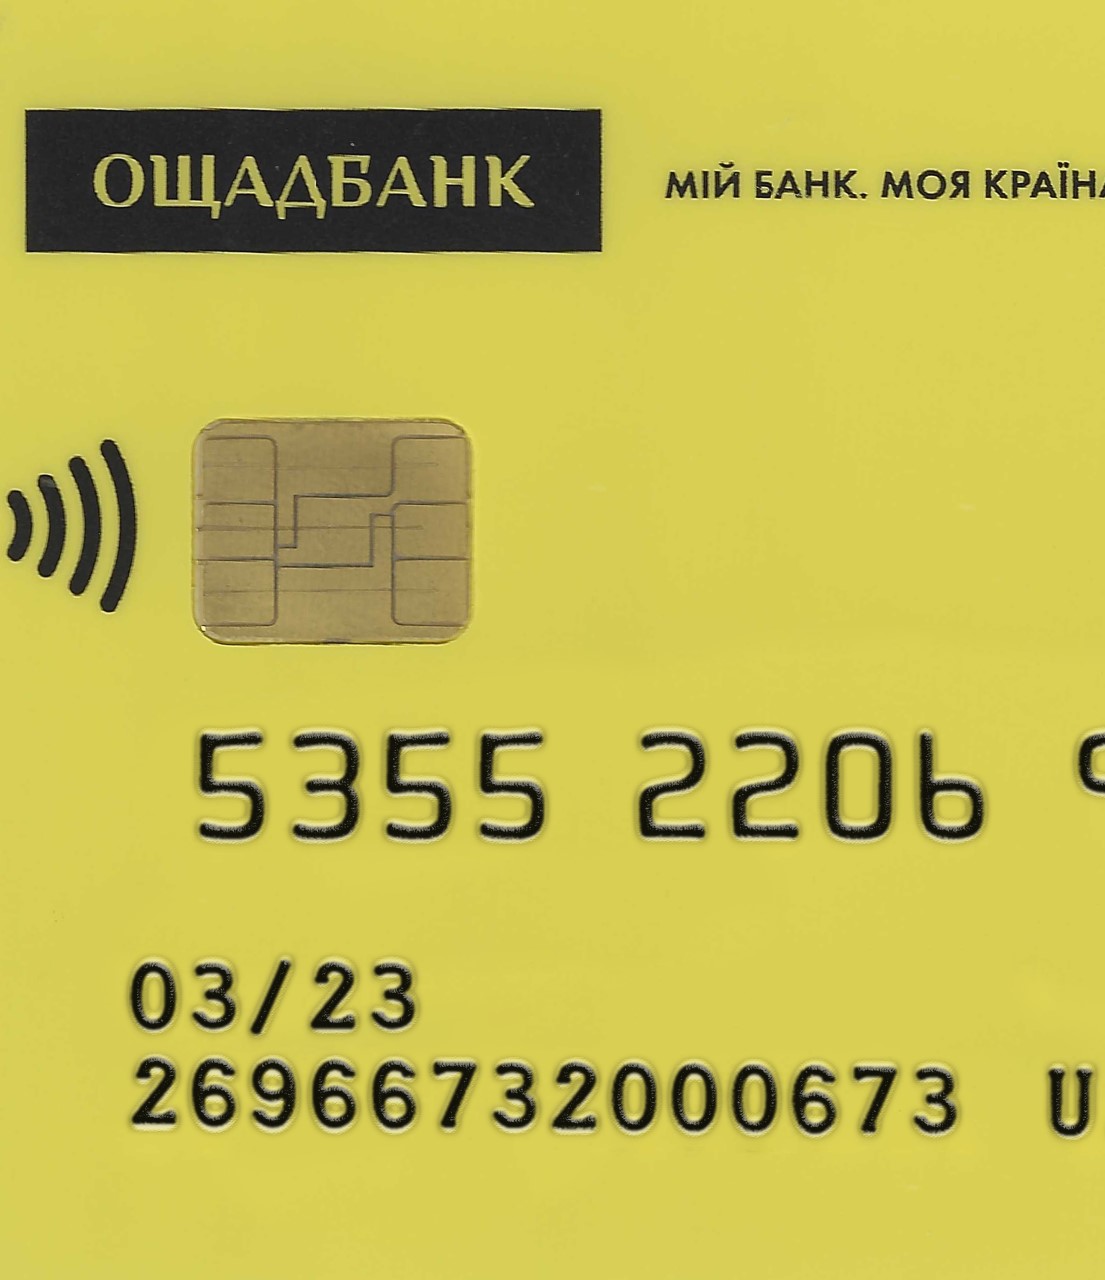 OSCHADBANK Credit Card PSD-2